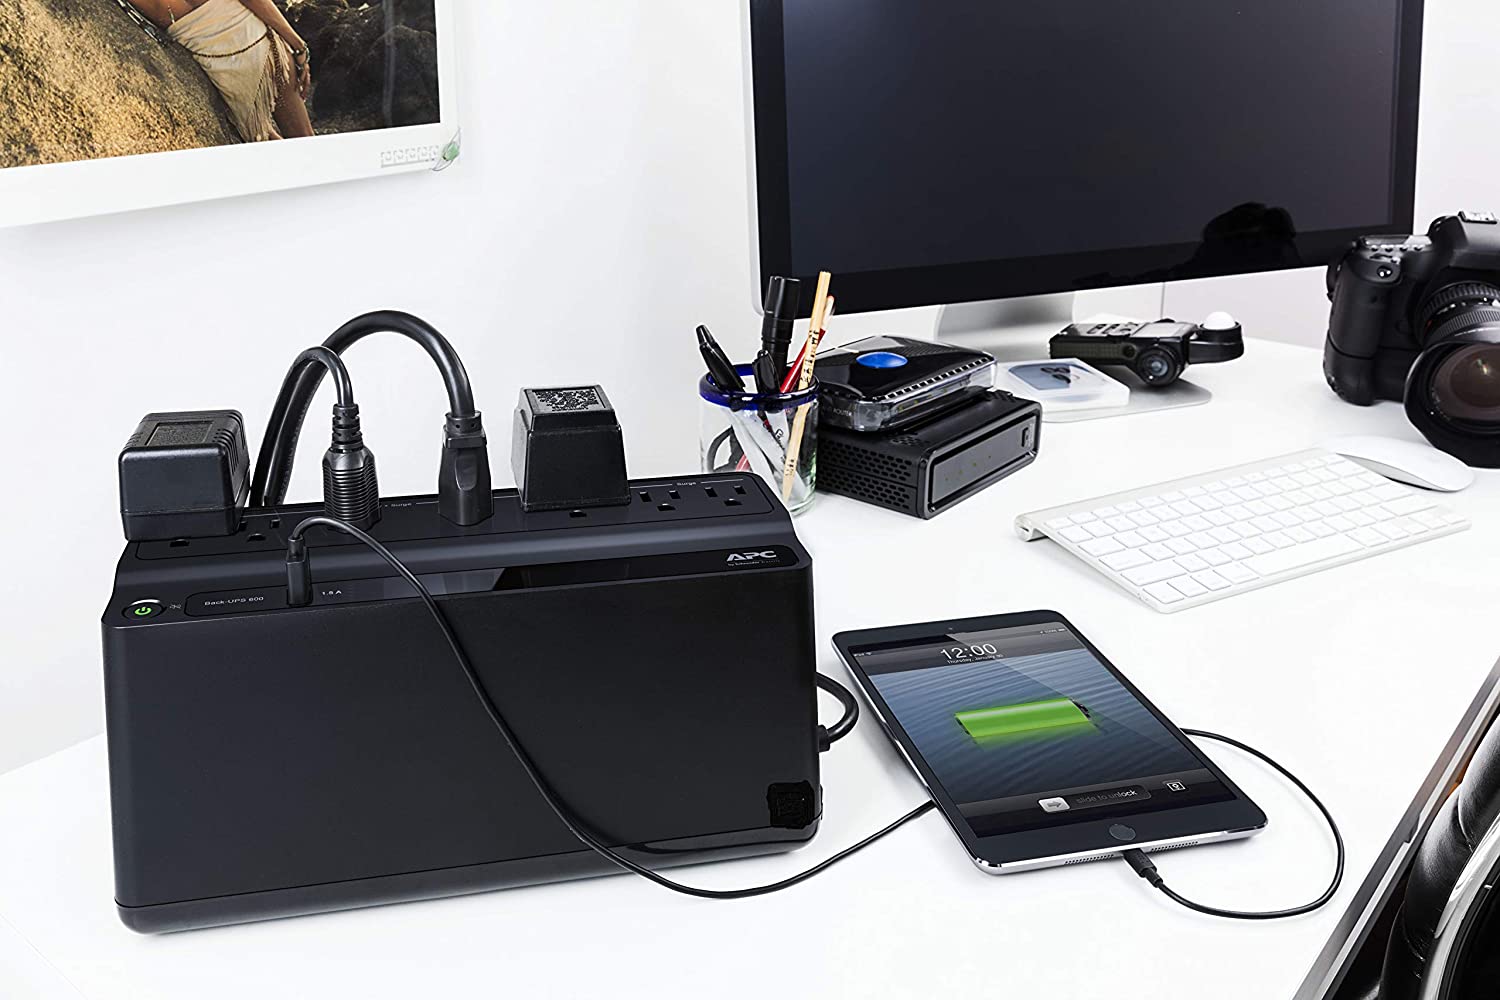 APC UPS Battery Backup & Surge Protector with USB Charger, 600VA APC Back-UPS